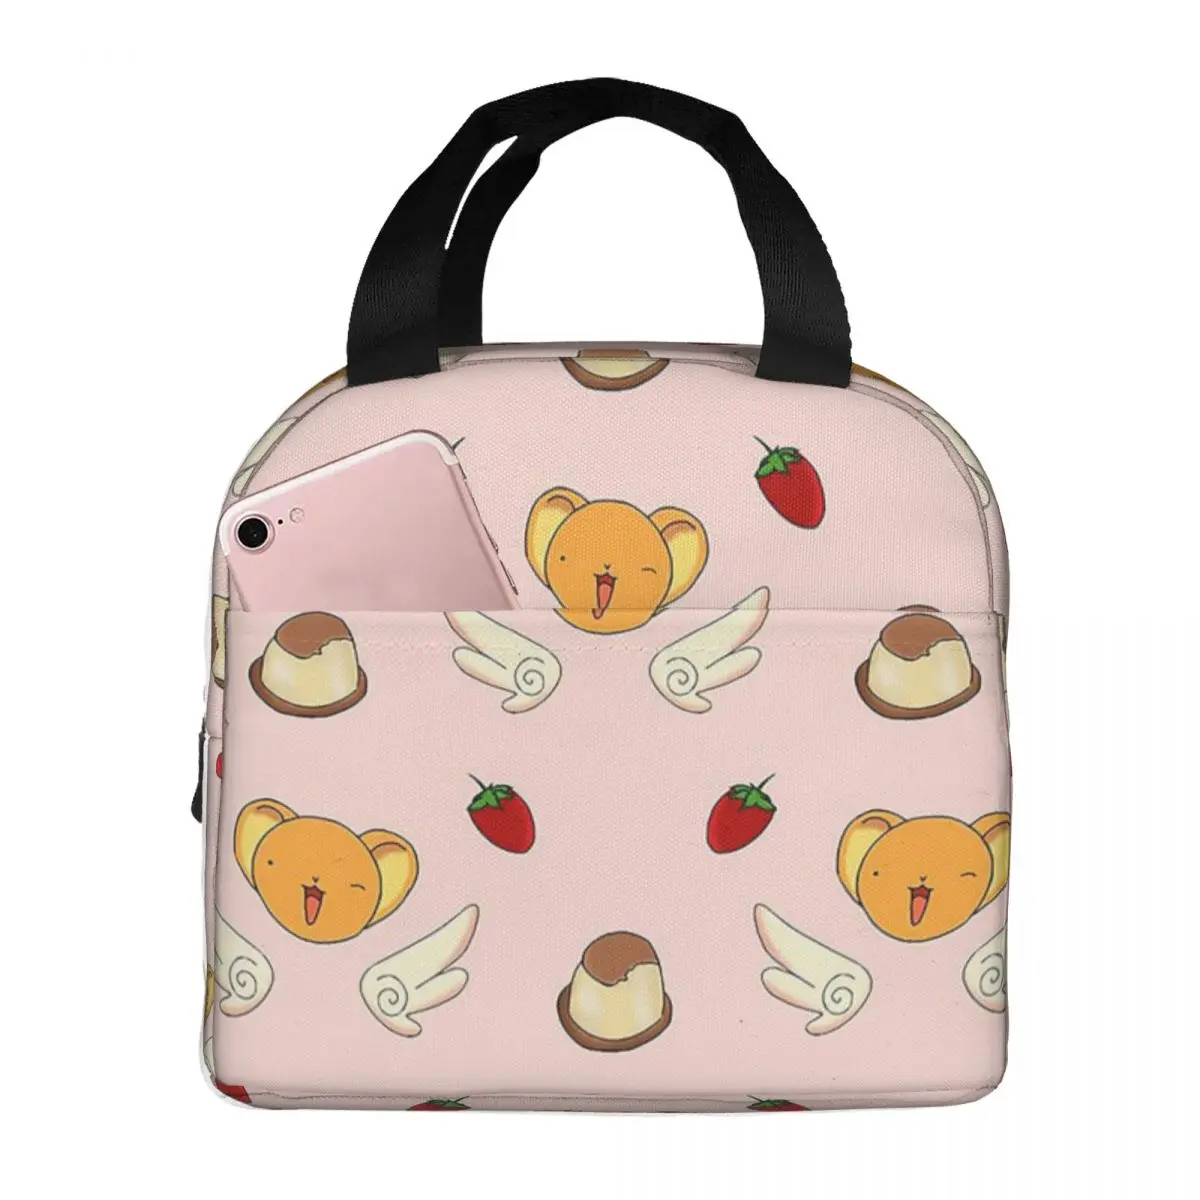 Lunch Bag for Men Women Kero Cardcaptor Sakura Insulated Cooler Portable Picnic Work Oxford Tote Food Bag